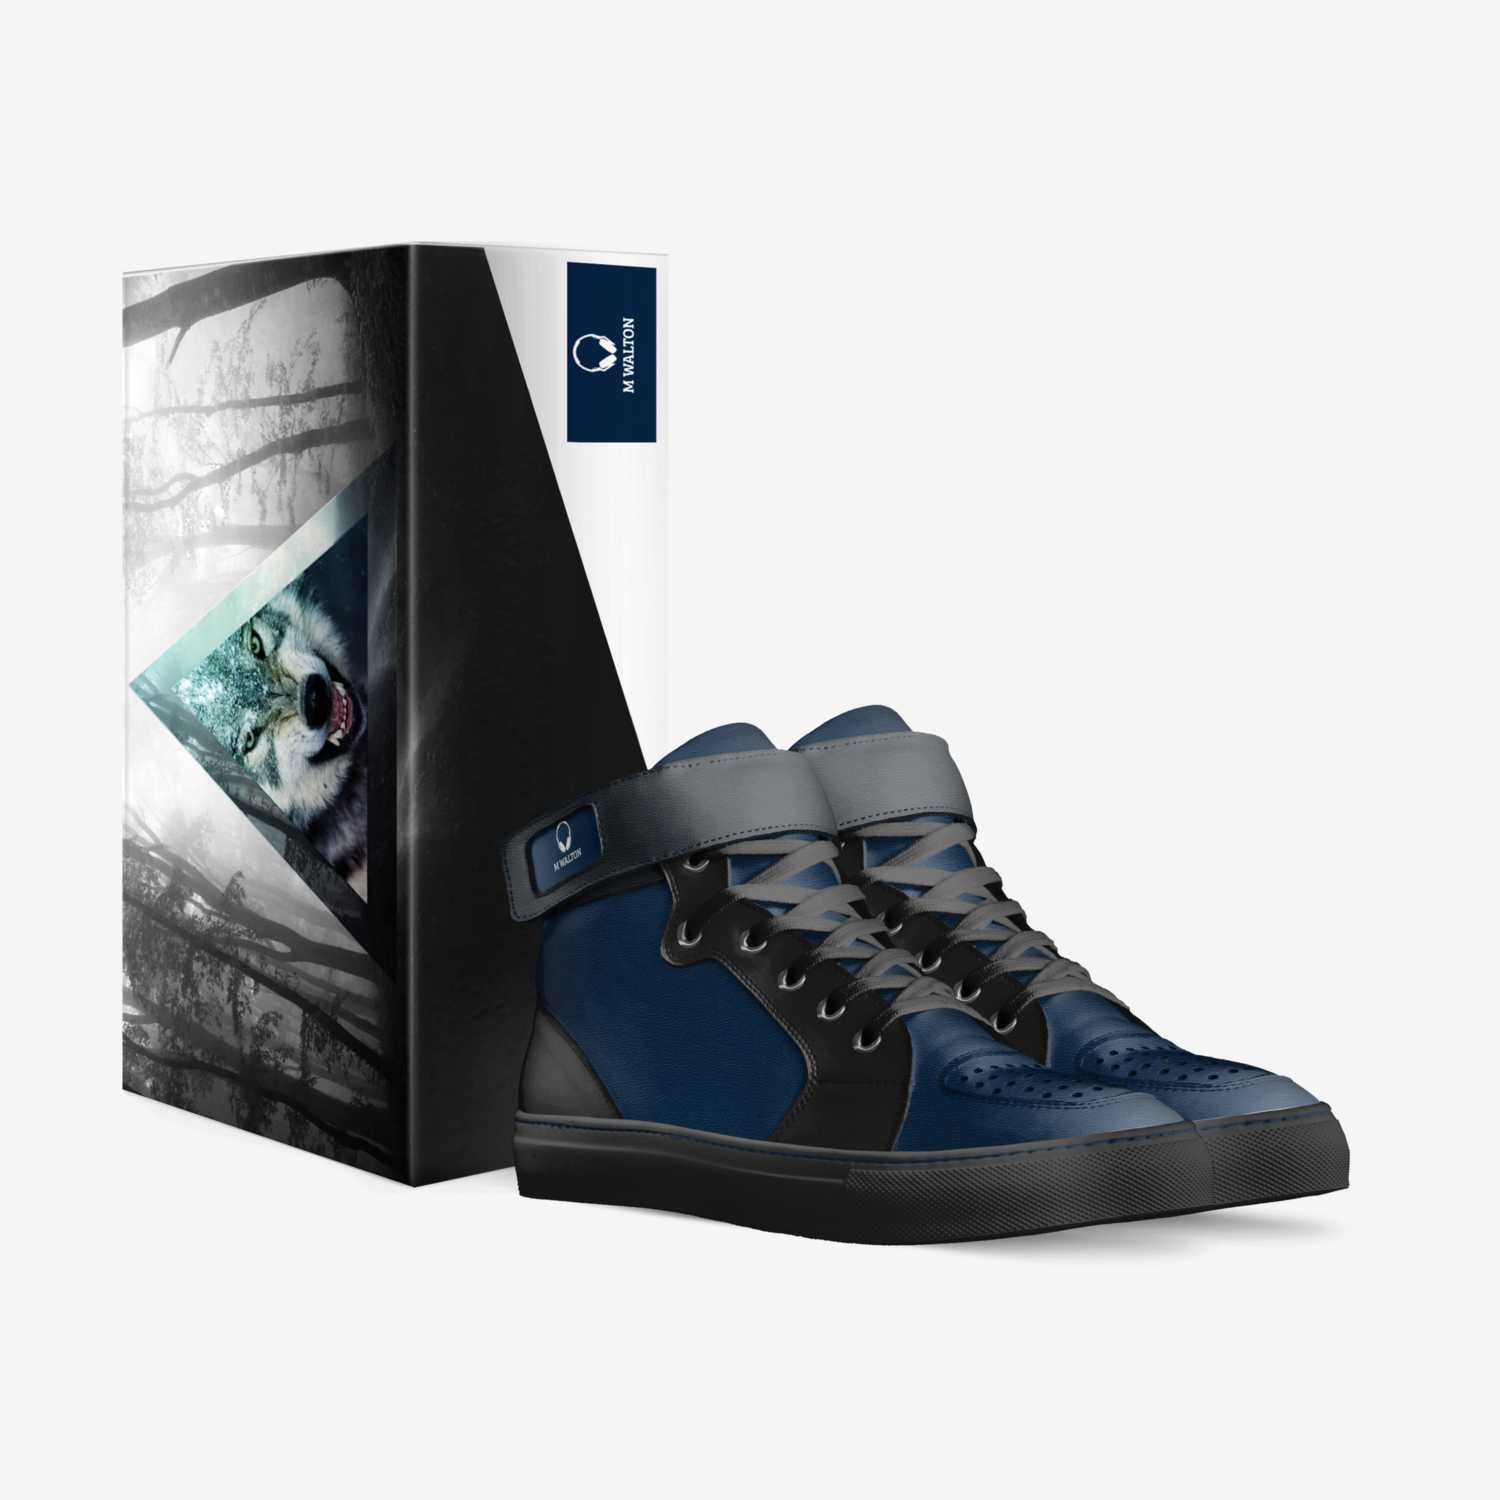 Marlon Walton custom made in Italy shoes by Carmen Woods | Box view